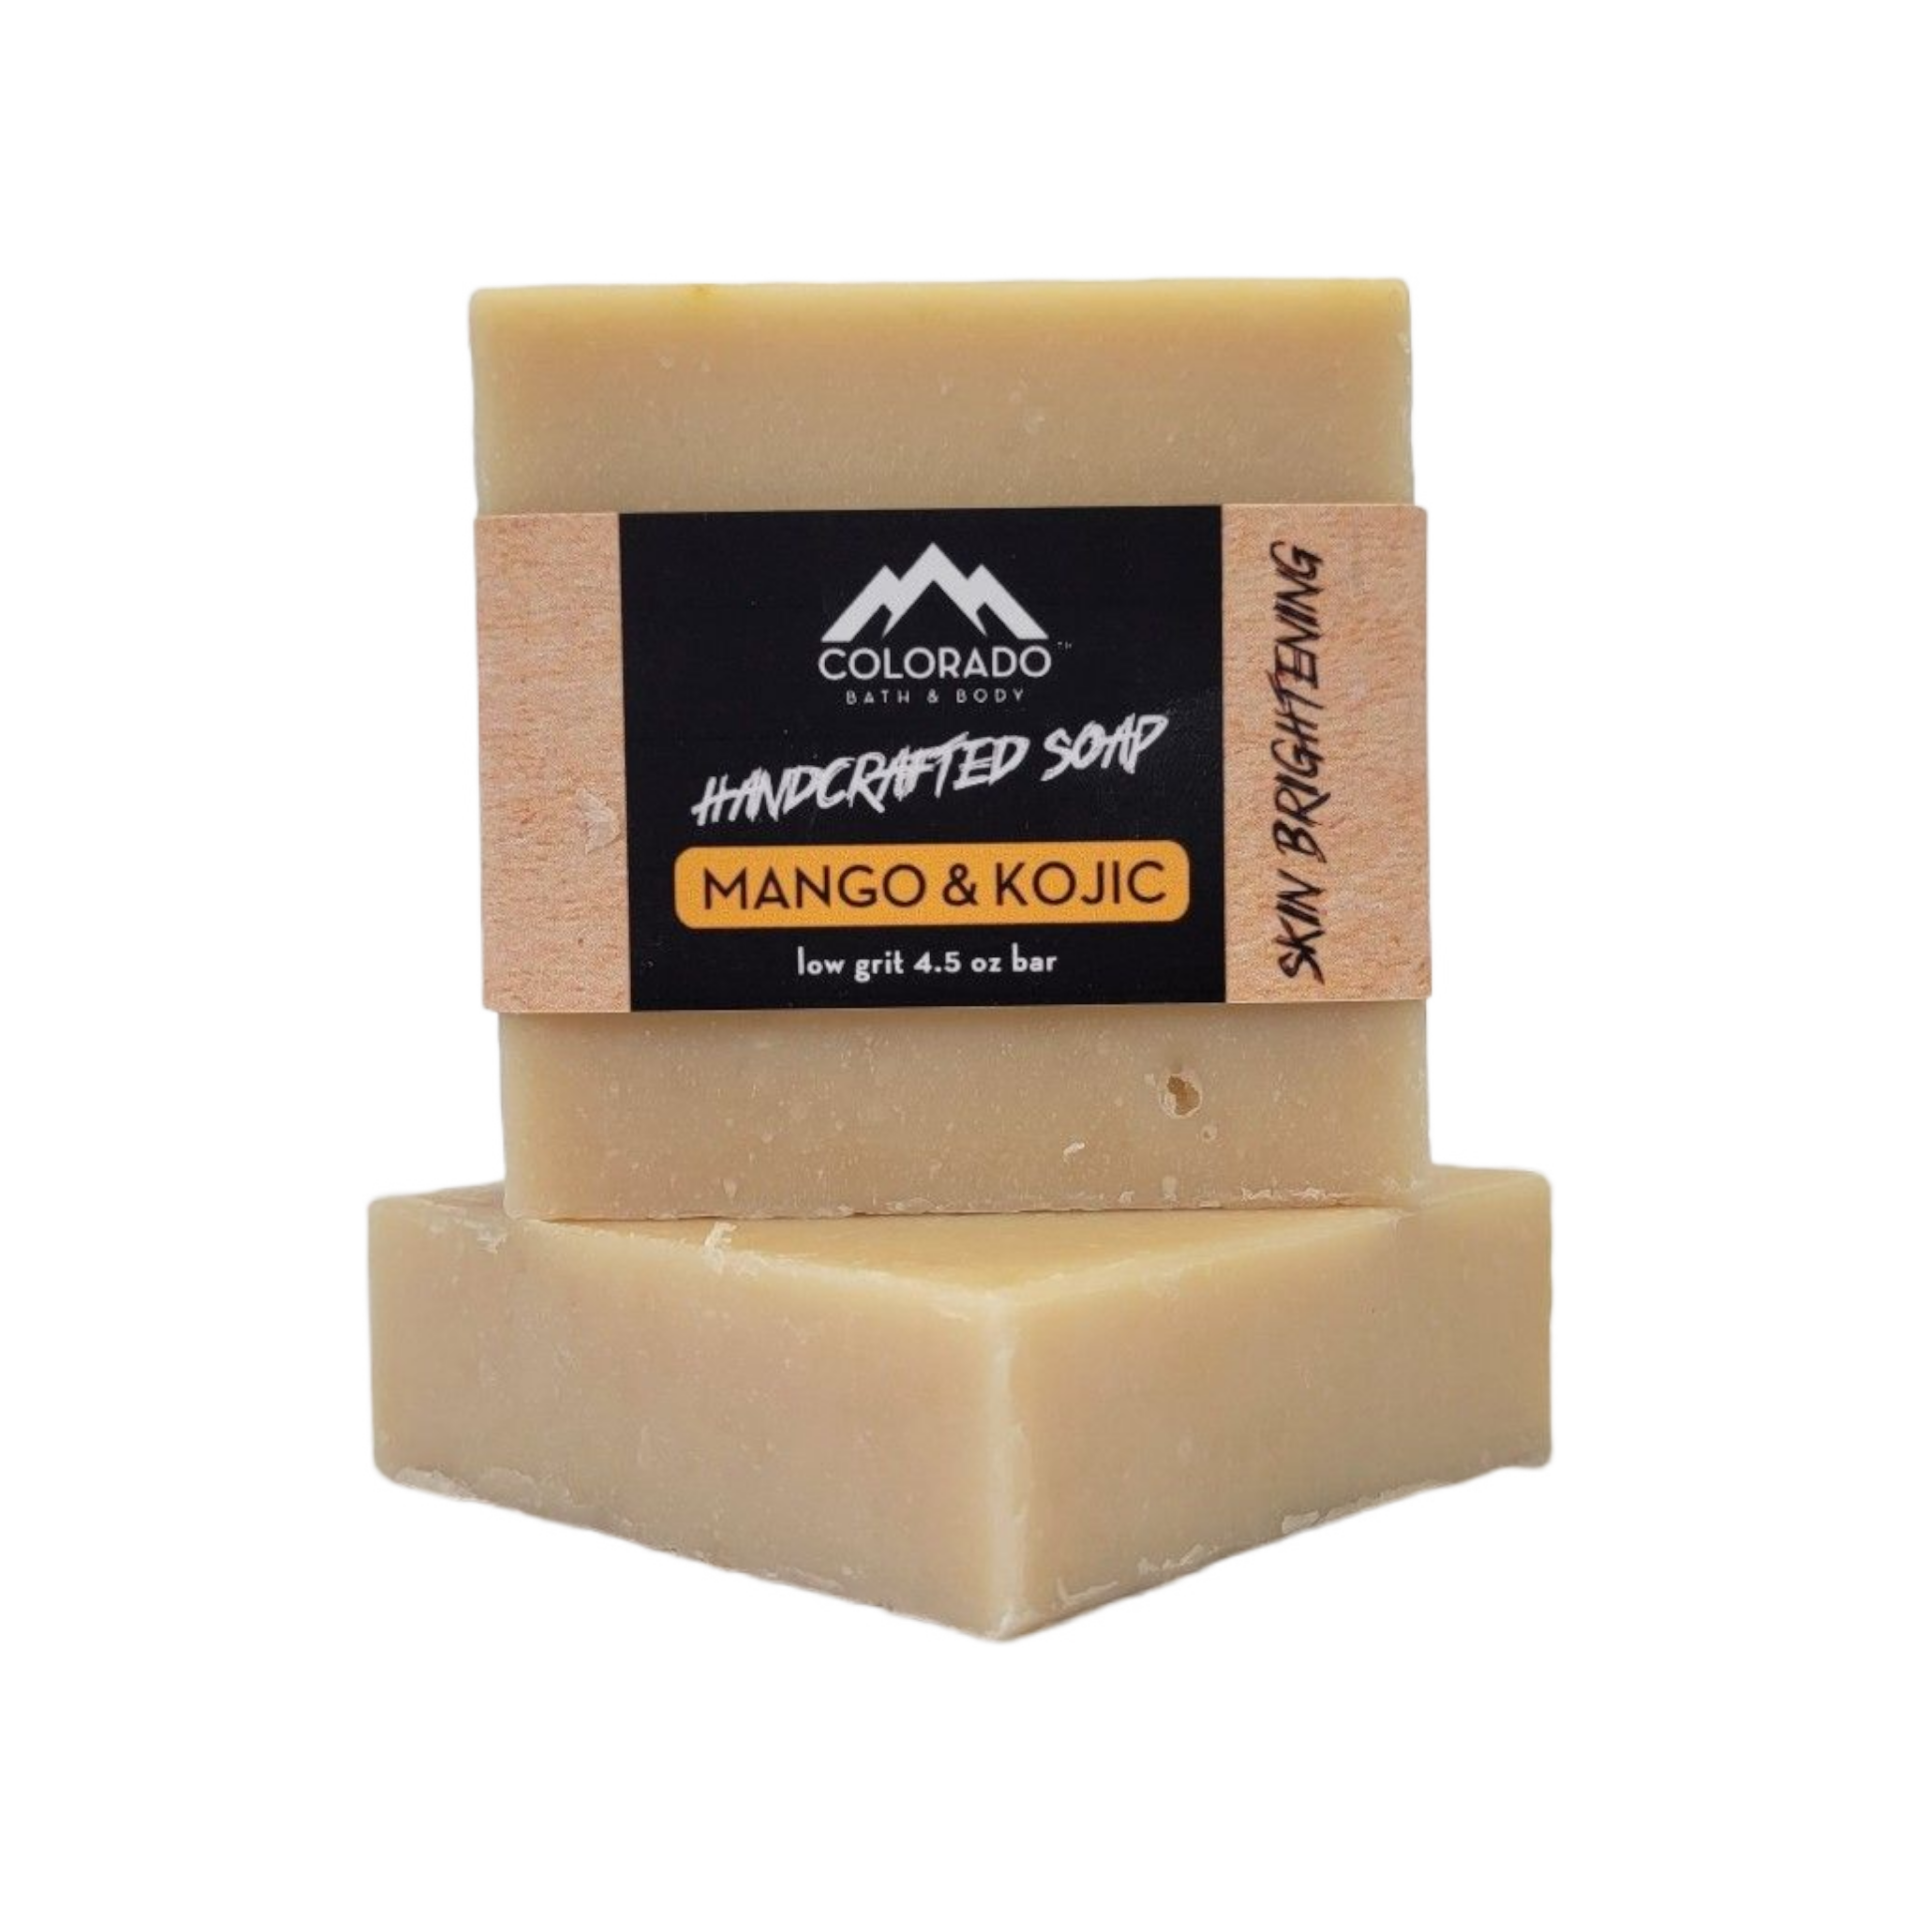 Mango & Kojic Handmade Soap